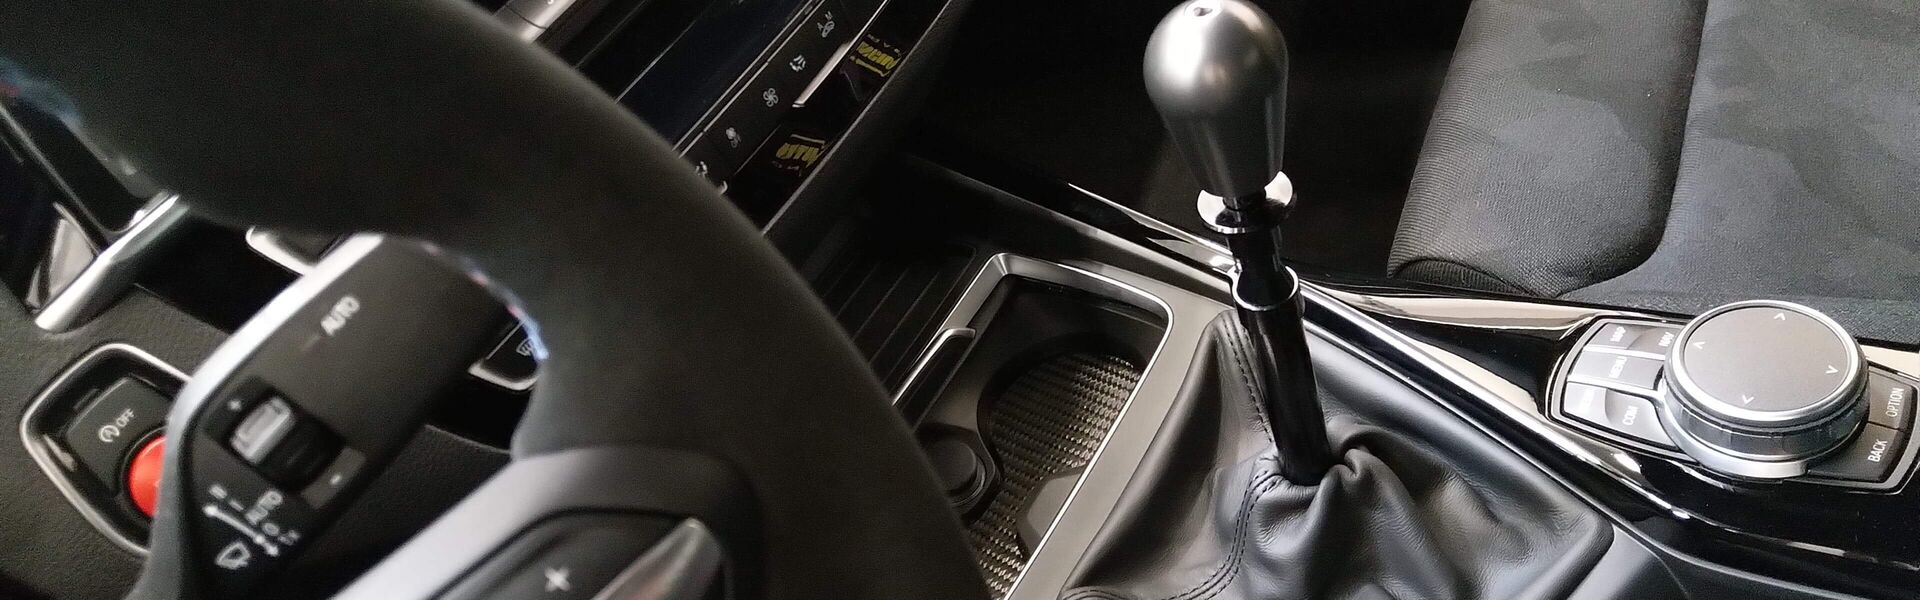 Gearbox/Shift BMW 435i F32